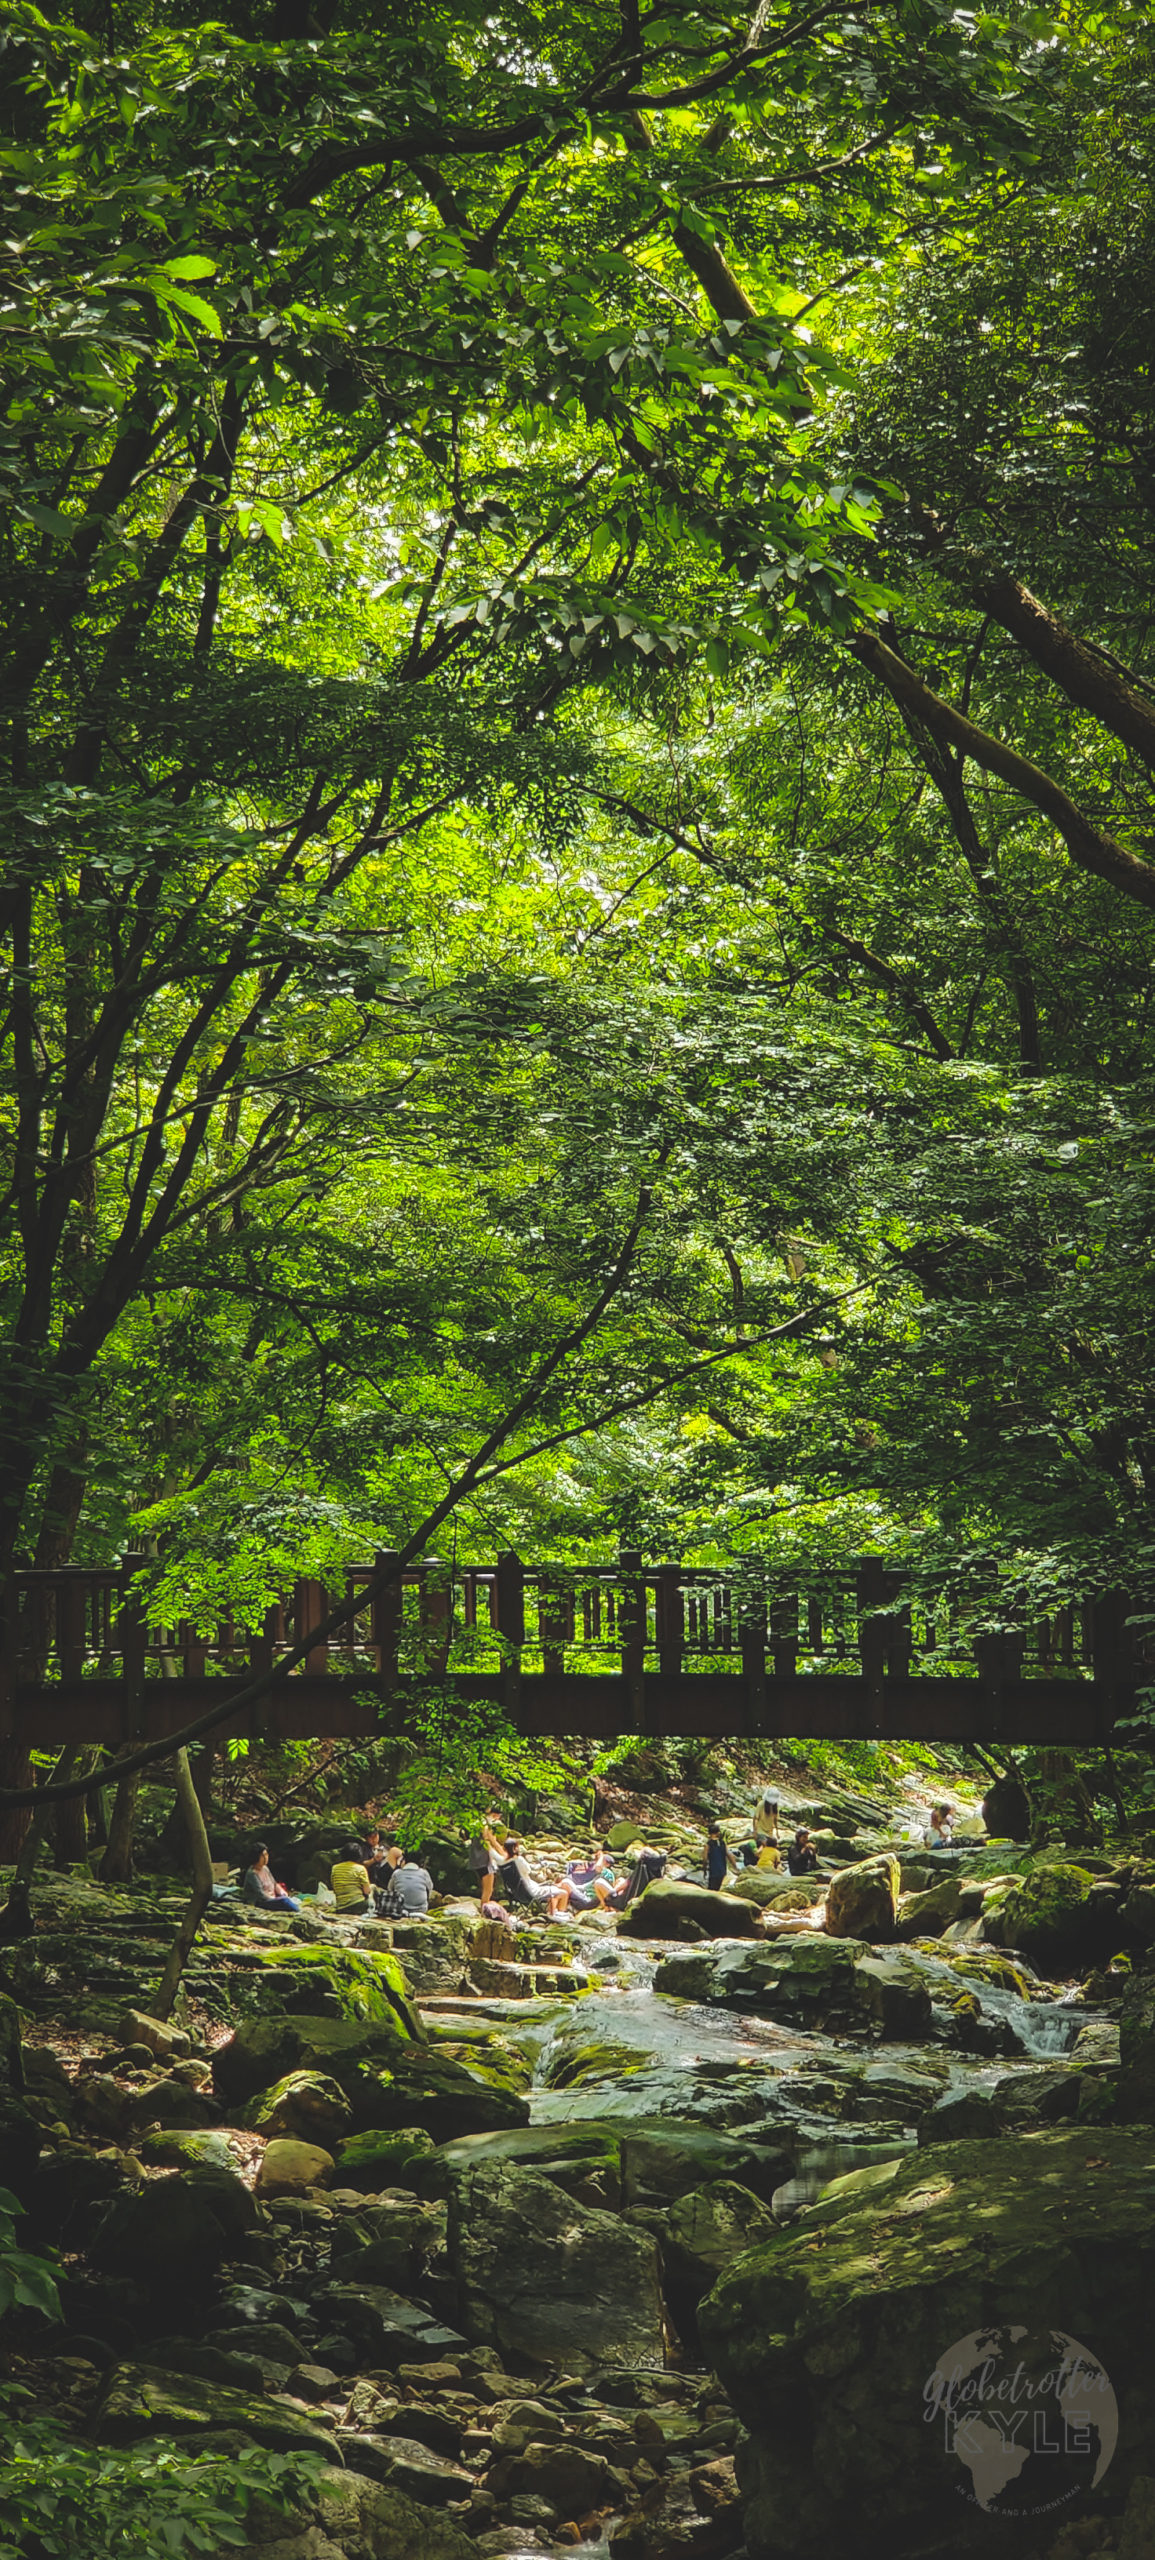 a bridge crosses a calm river in a forest in south korea